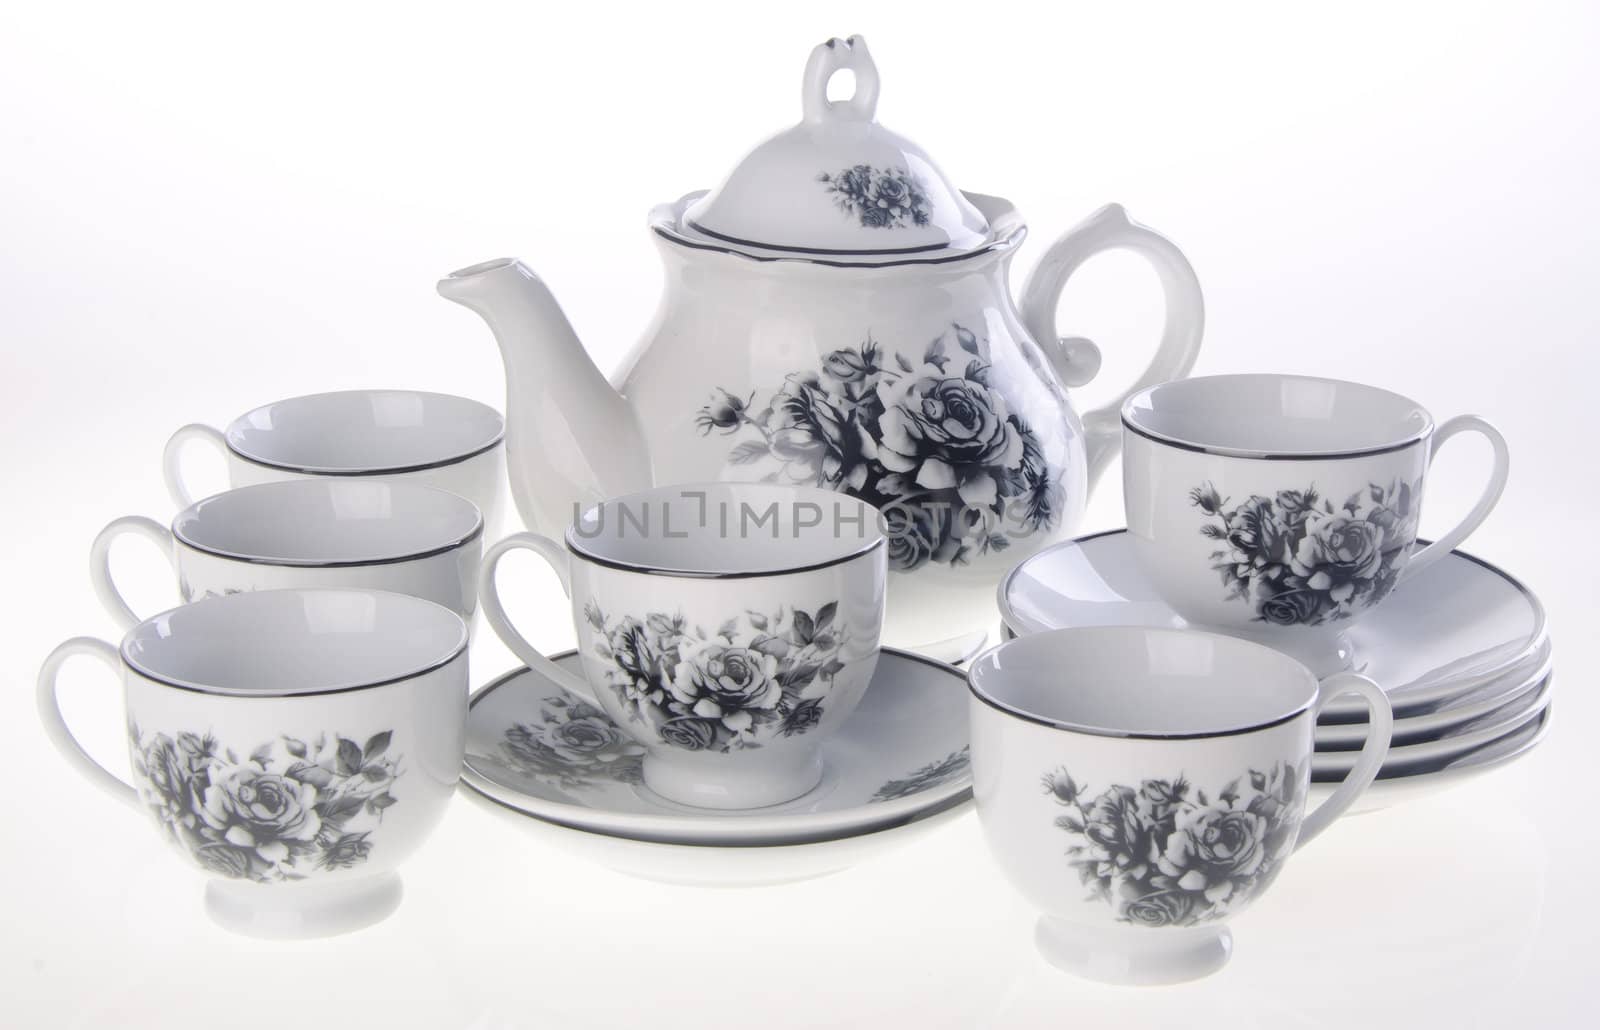 tea pot, ceramic teapot on background. by heinteh